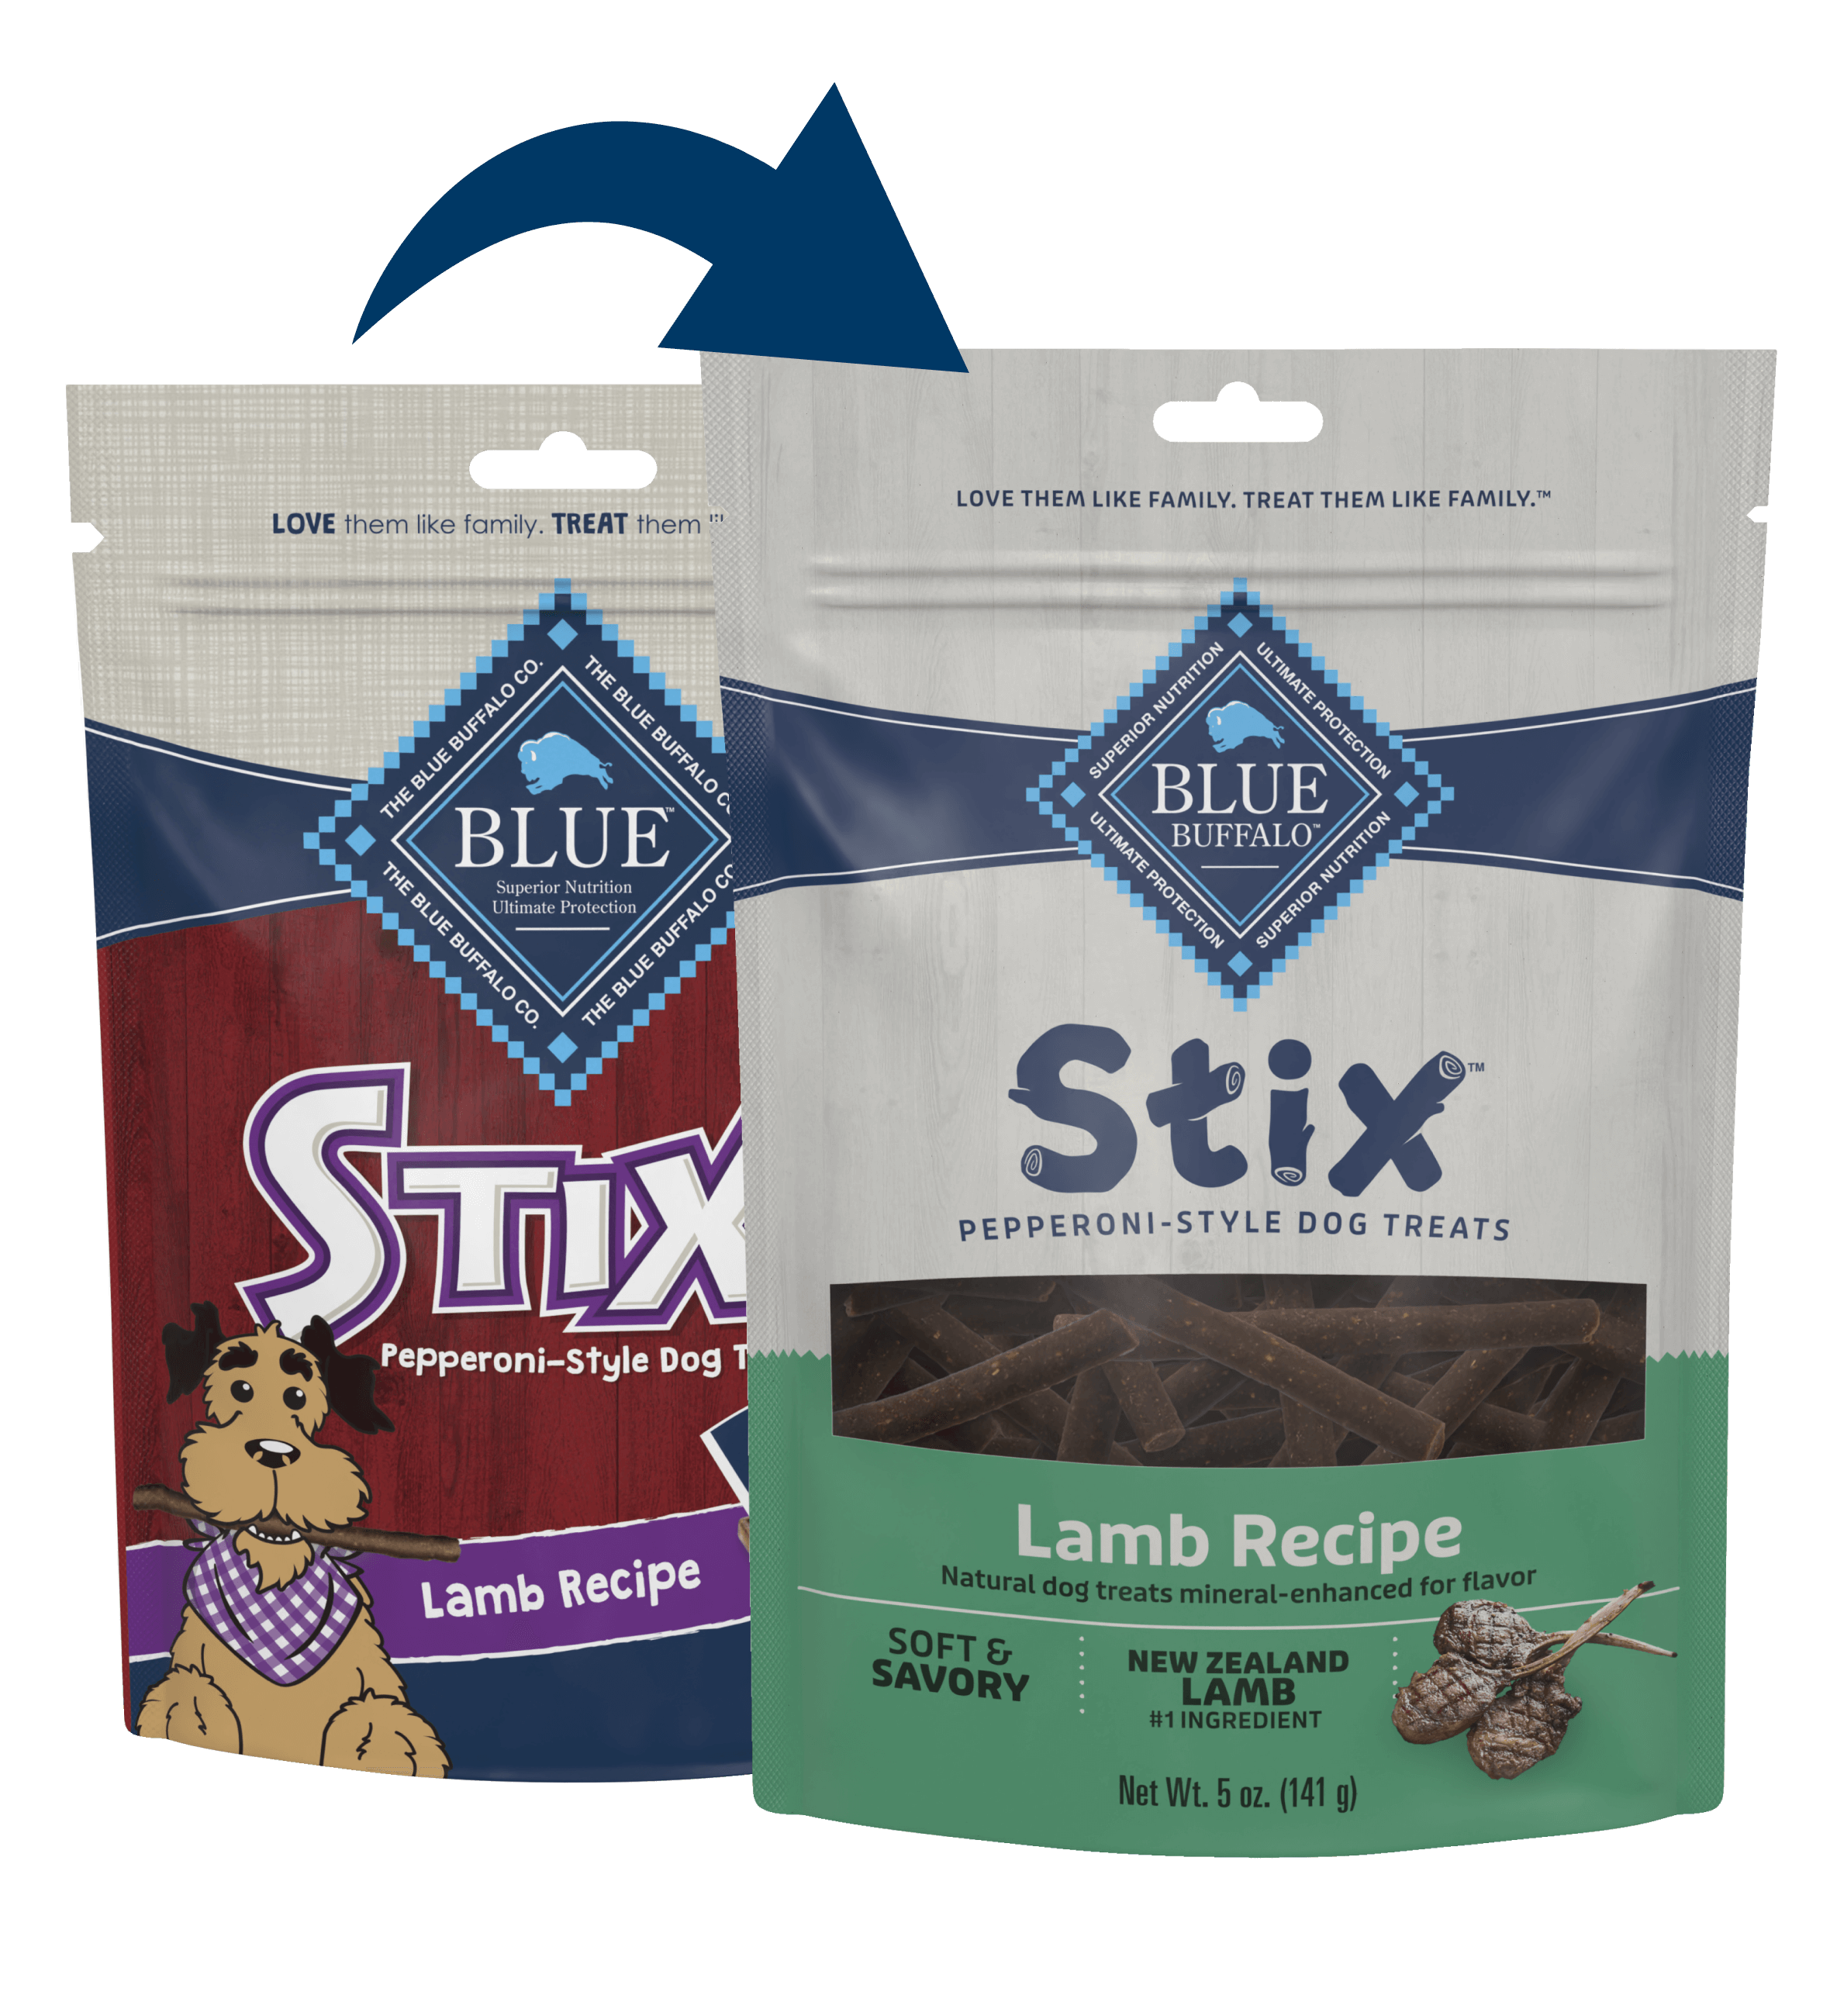 A bag of BLUE Stix Pepperoni-Style Dog Treats Lamb Recipe dog food